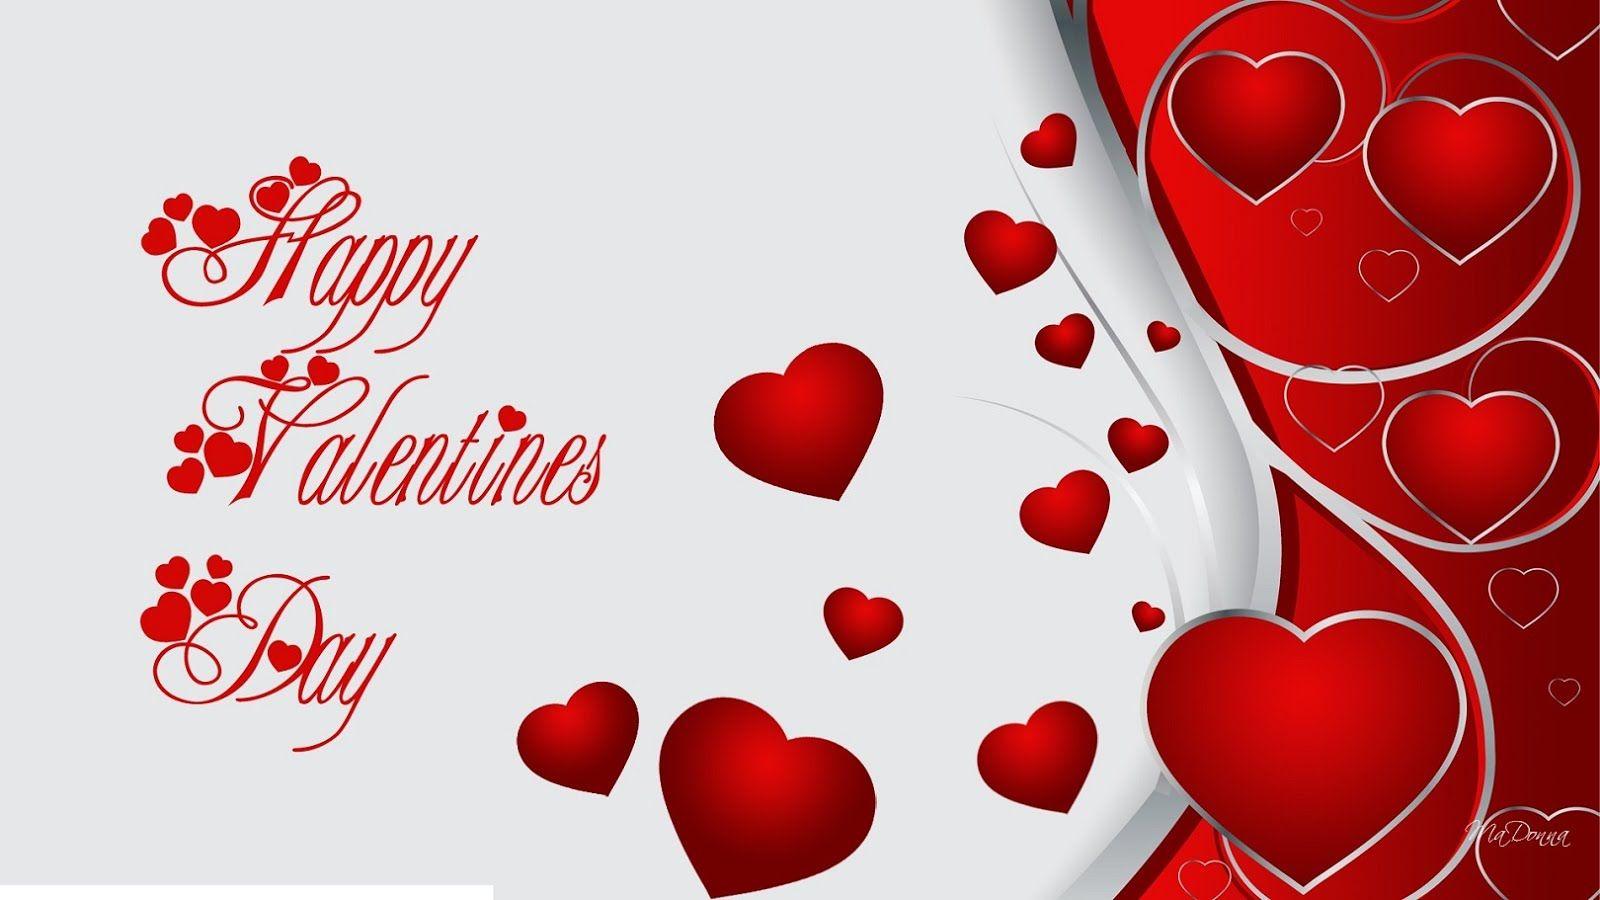 Happy Valentines Day Whatsapp Dp, Image 2018 Happy Valentines